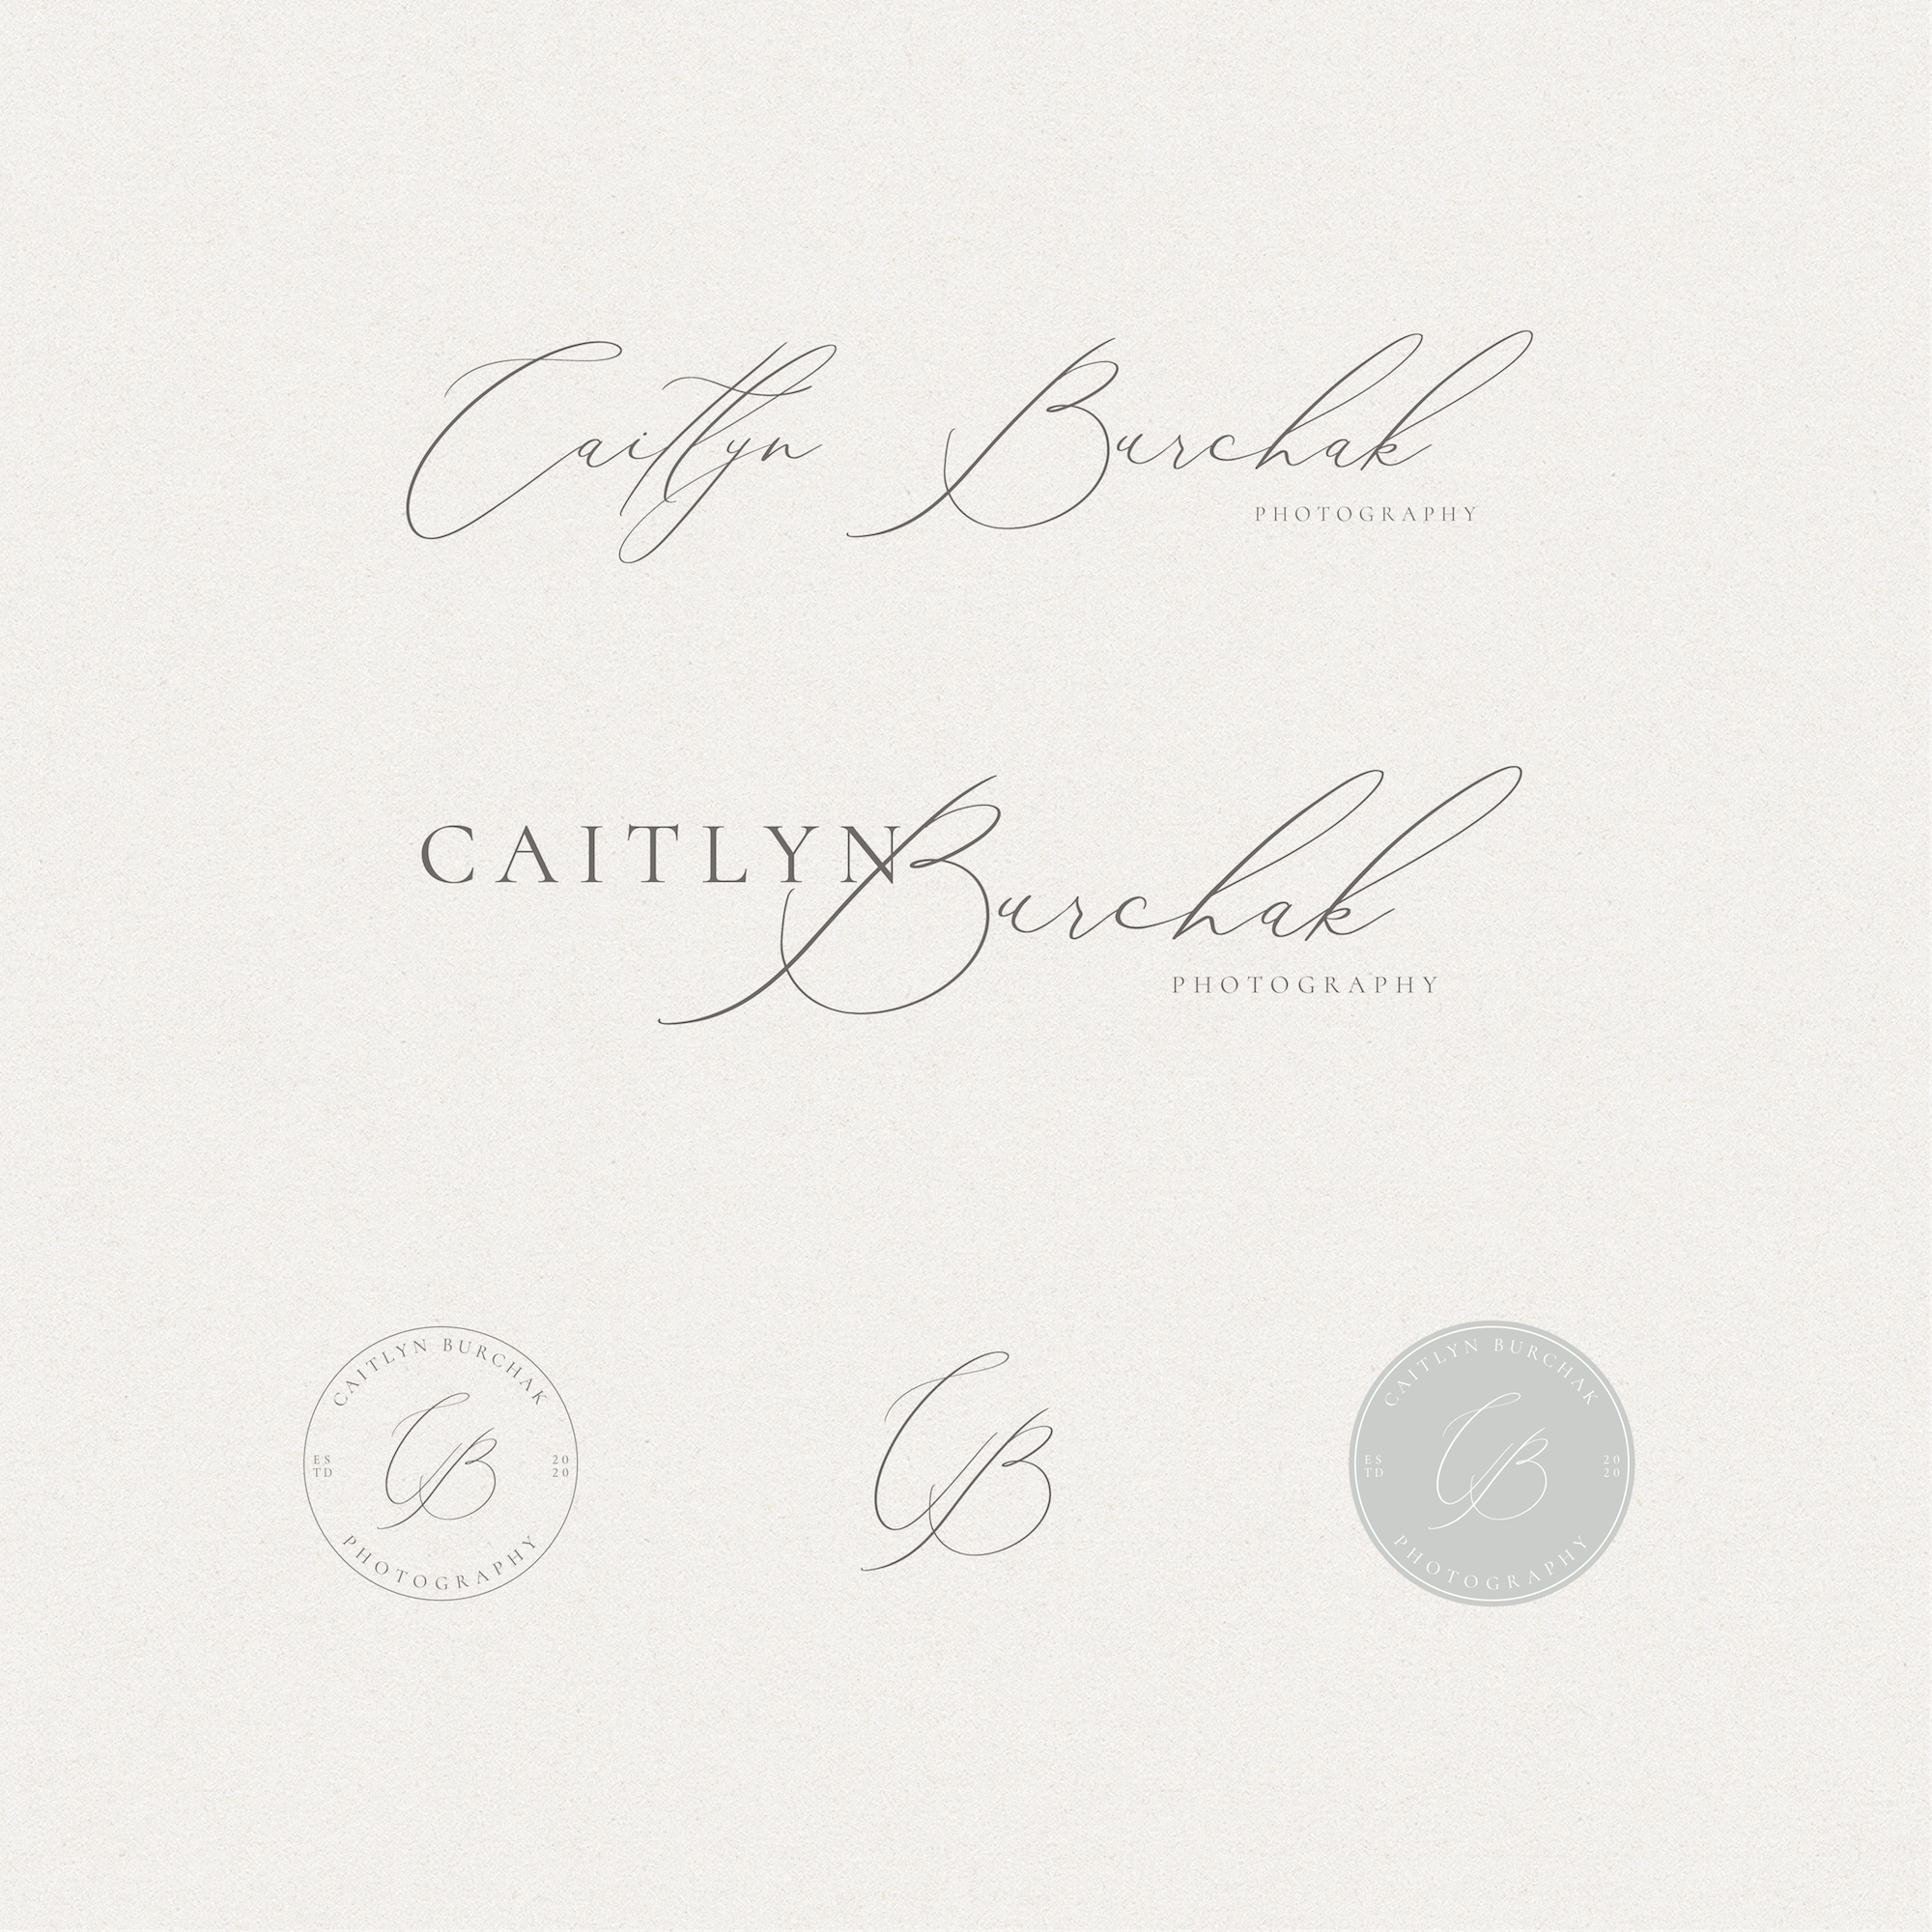 caitlyn burchak photography logos